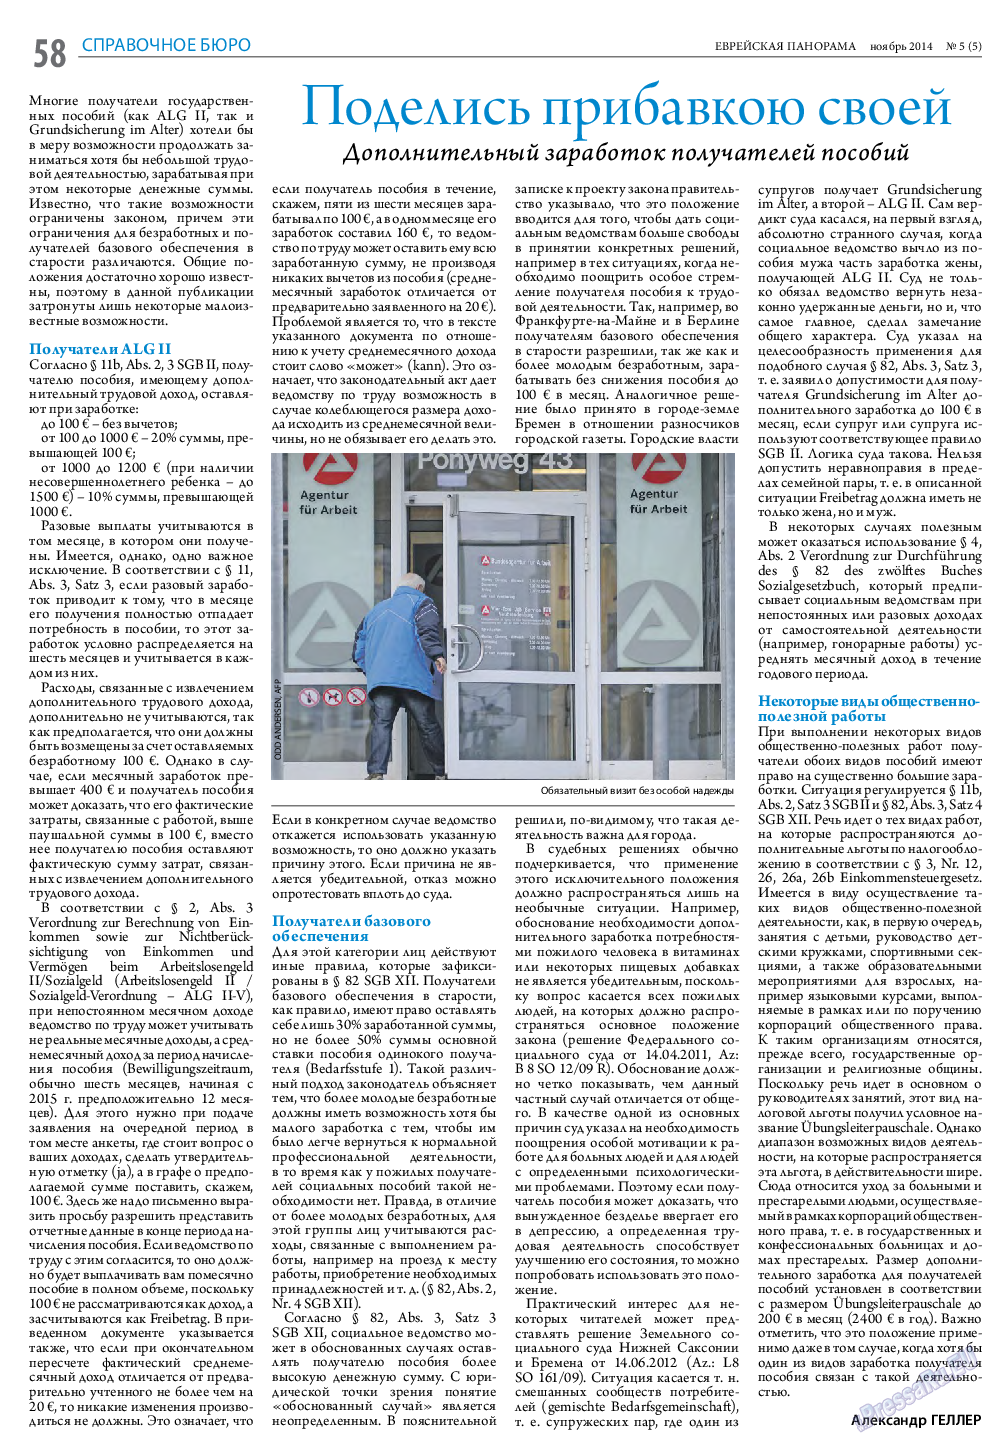 Еврейская панорама, газета. 2014 №5 стр.58